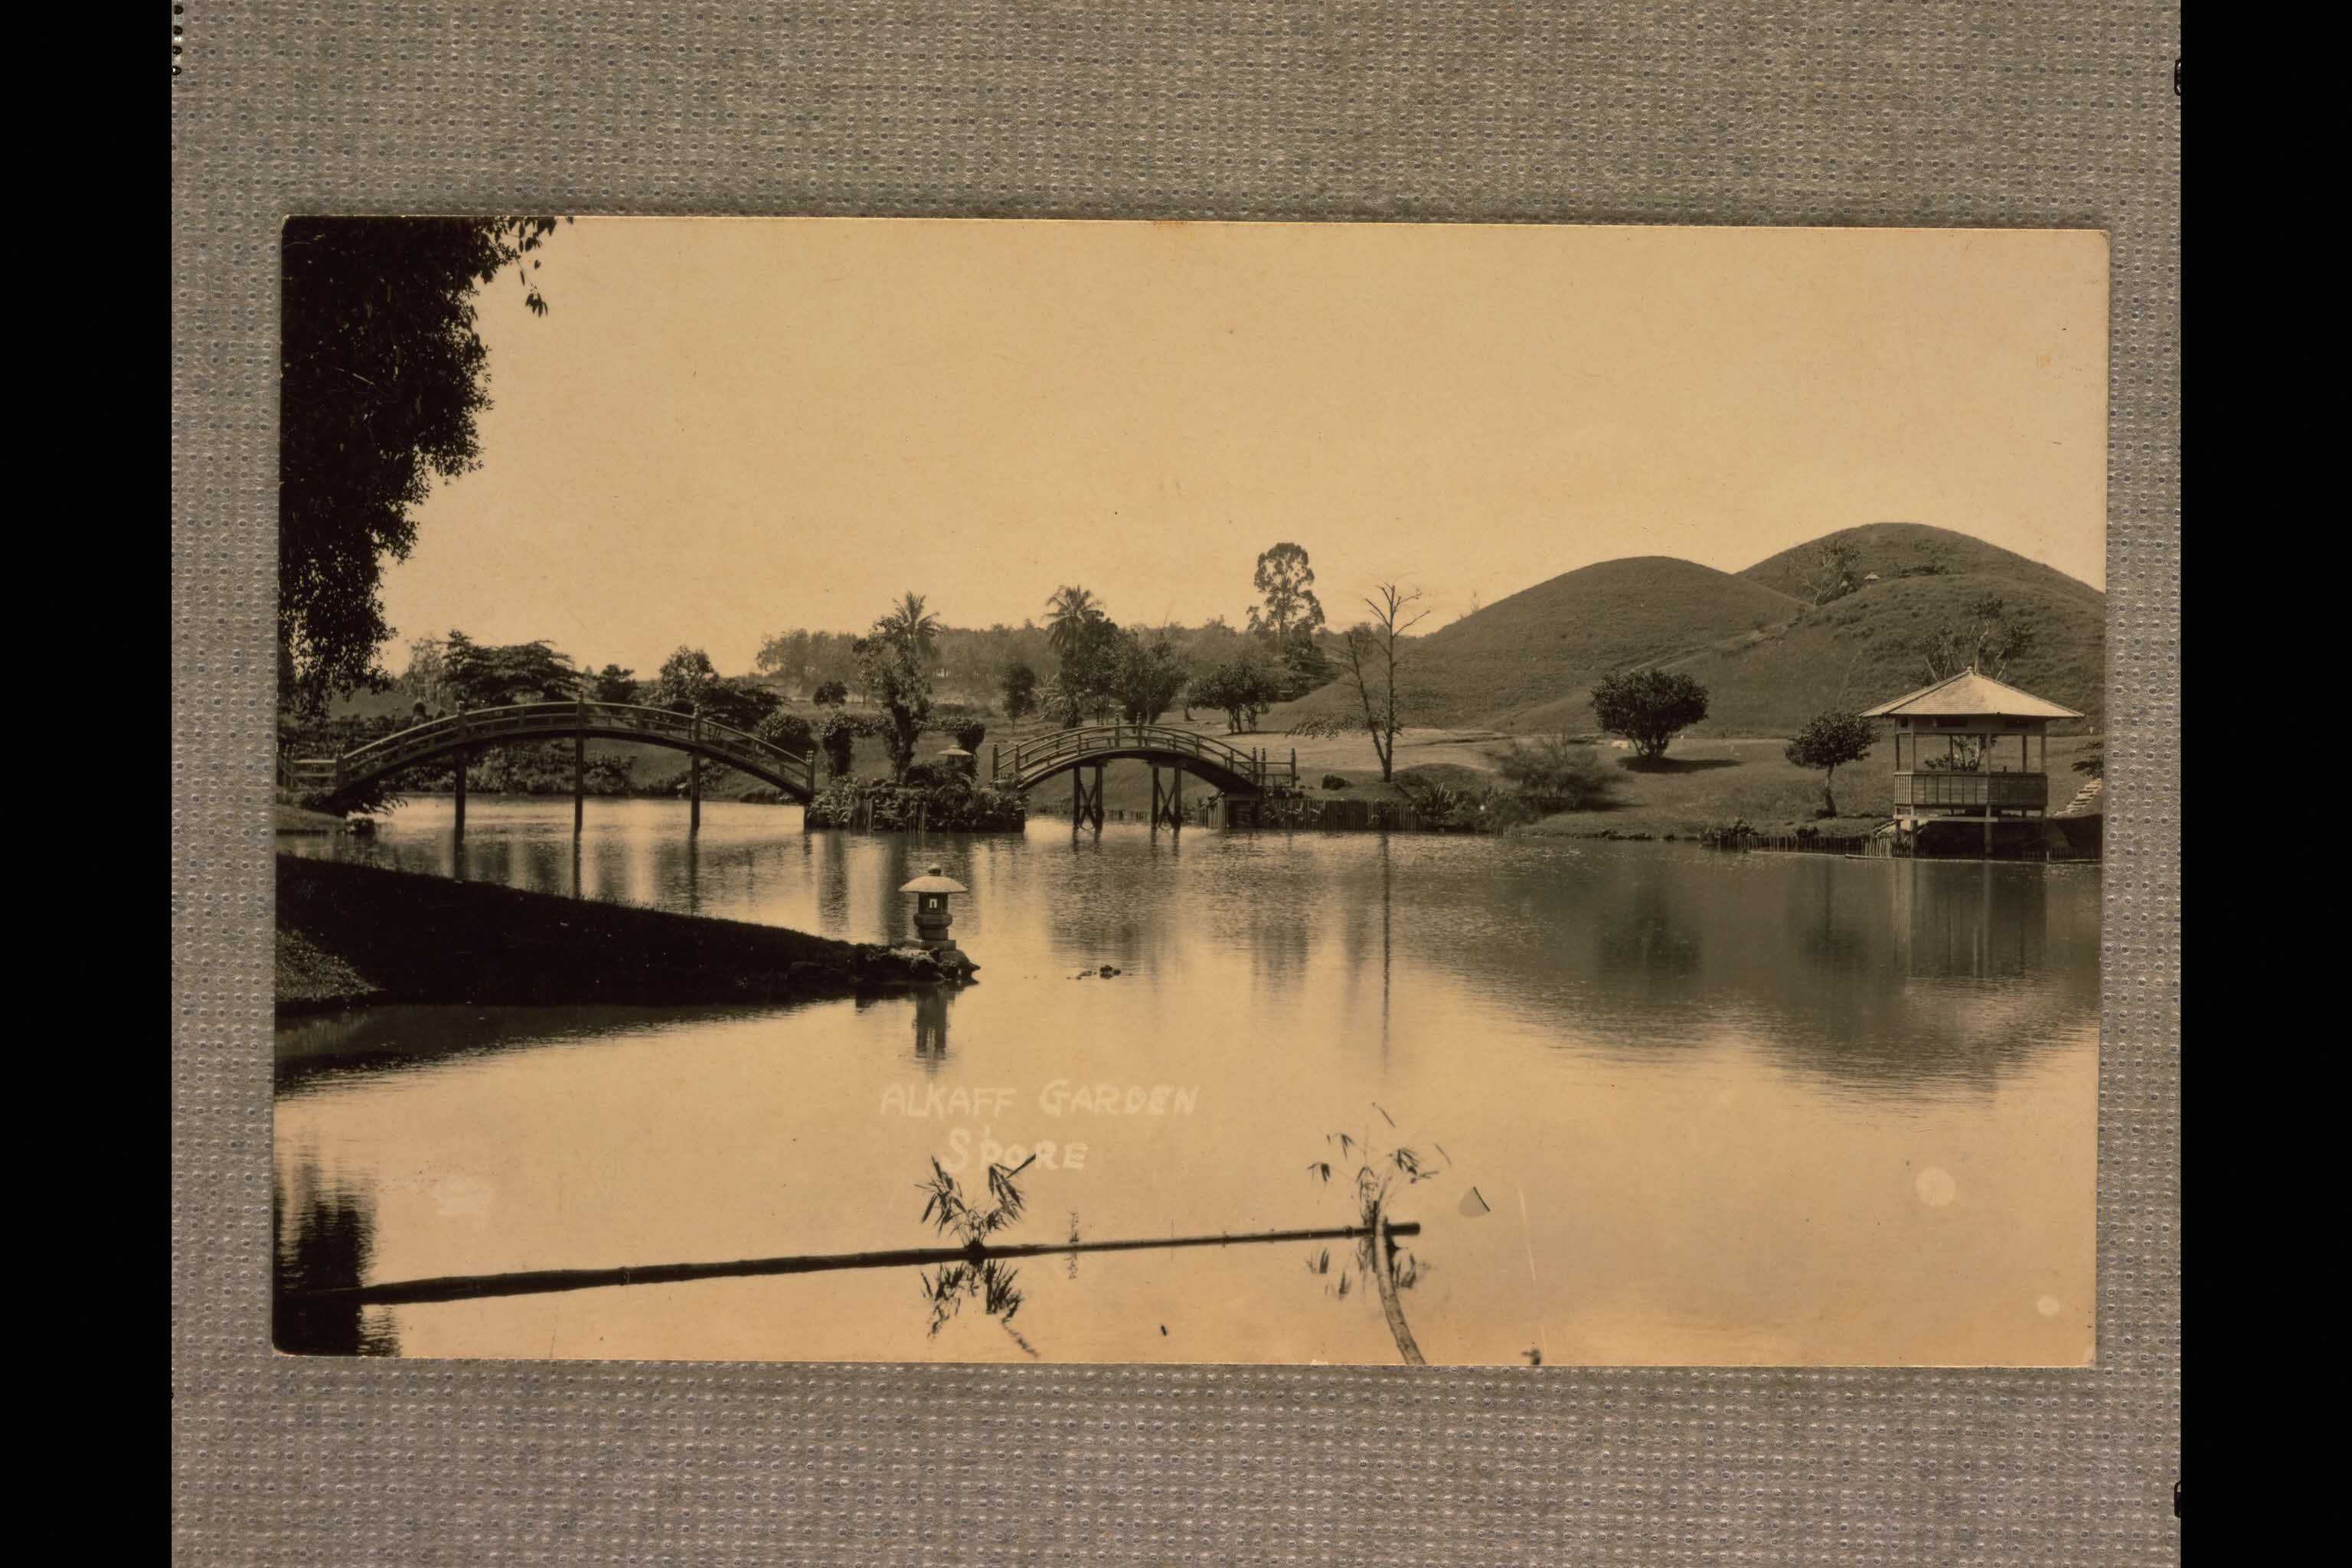 Alkaff Lake Gardens, 1920s.